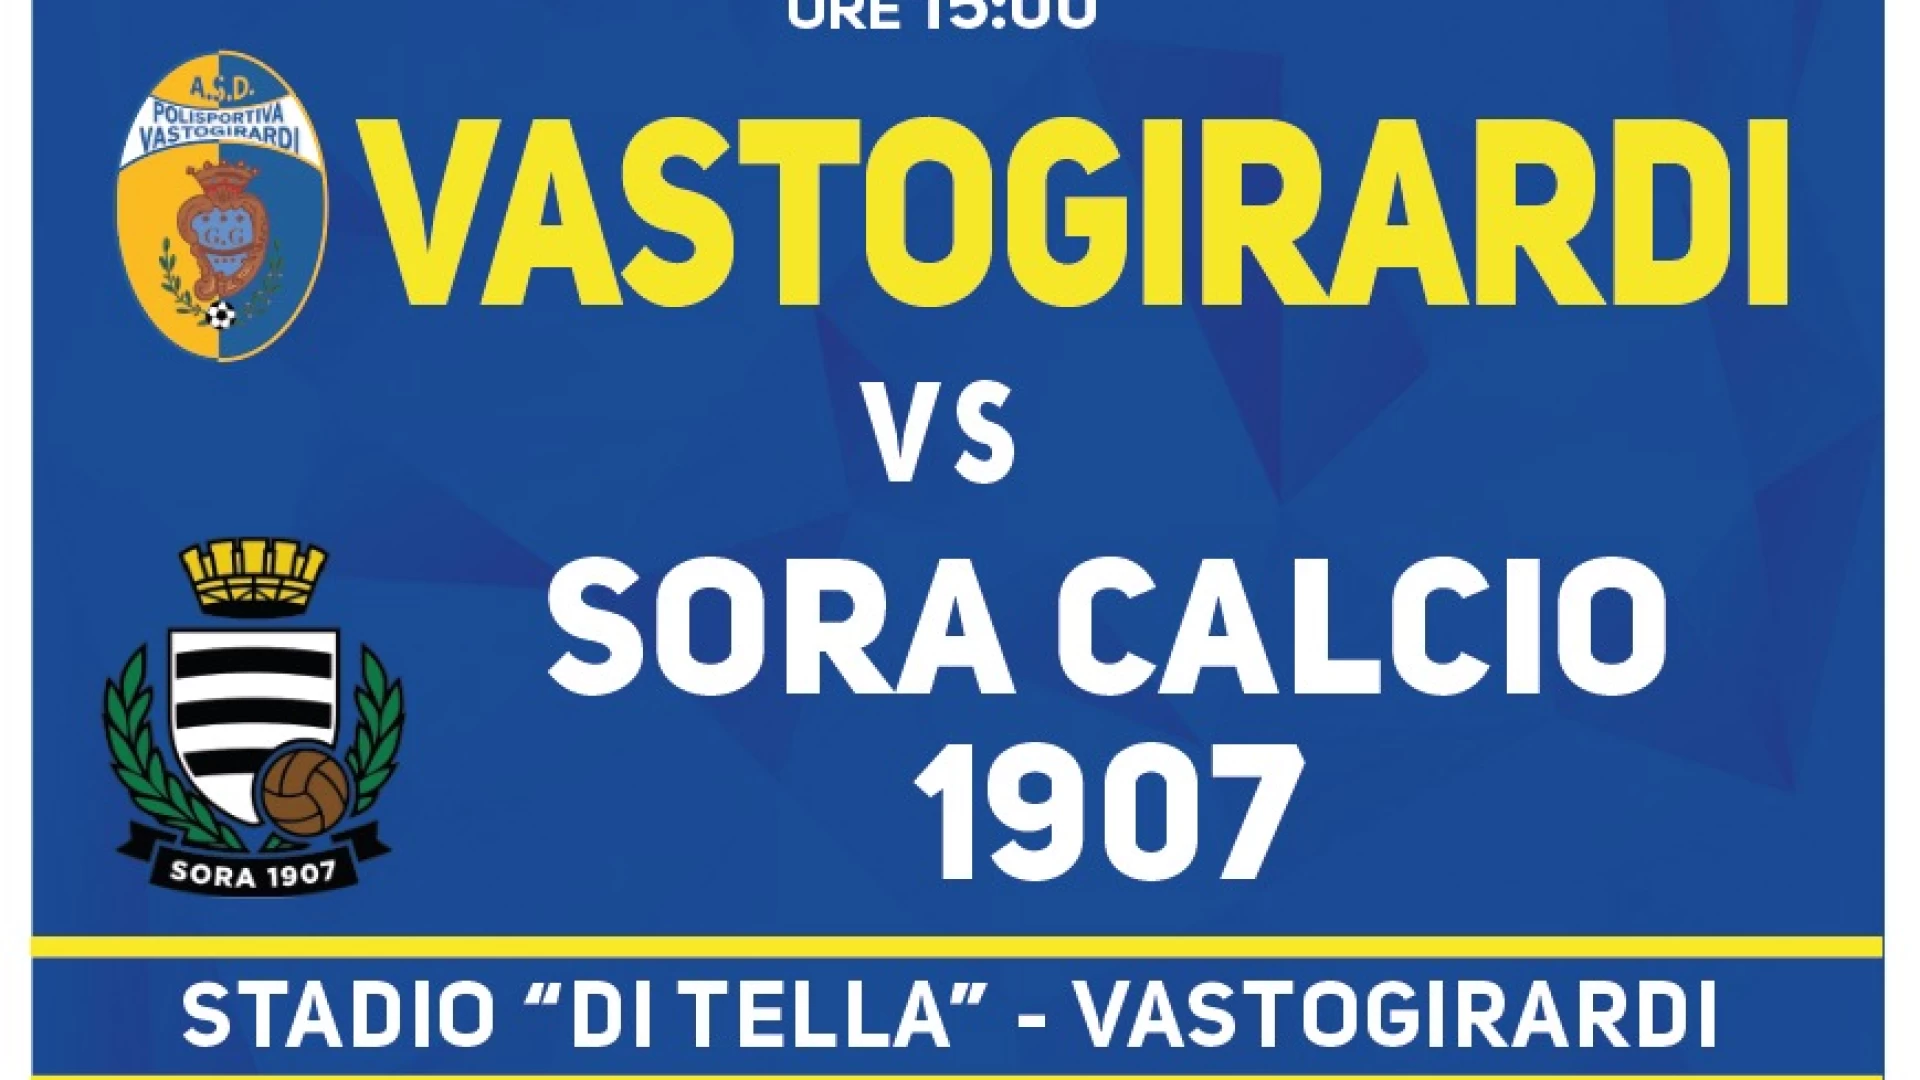 Vastogirardi -Sora: 500i biglietti totali in vendita.